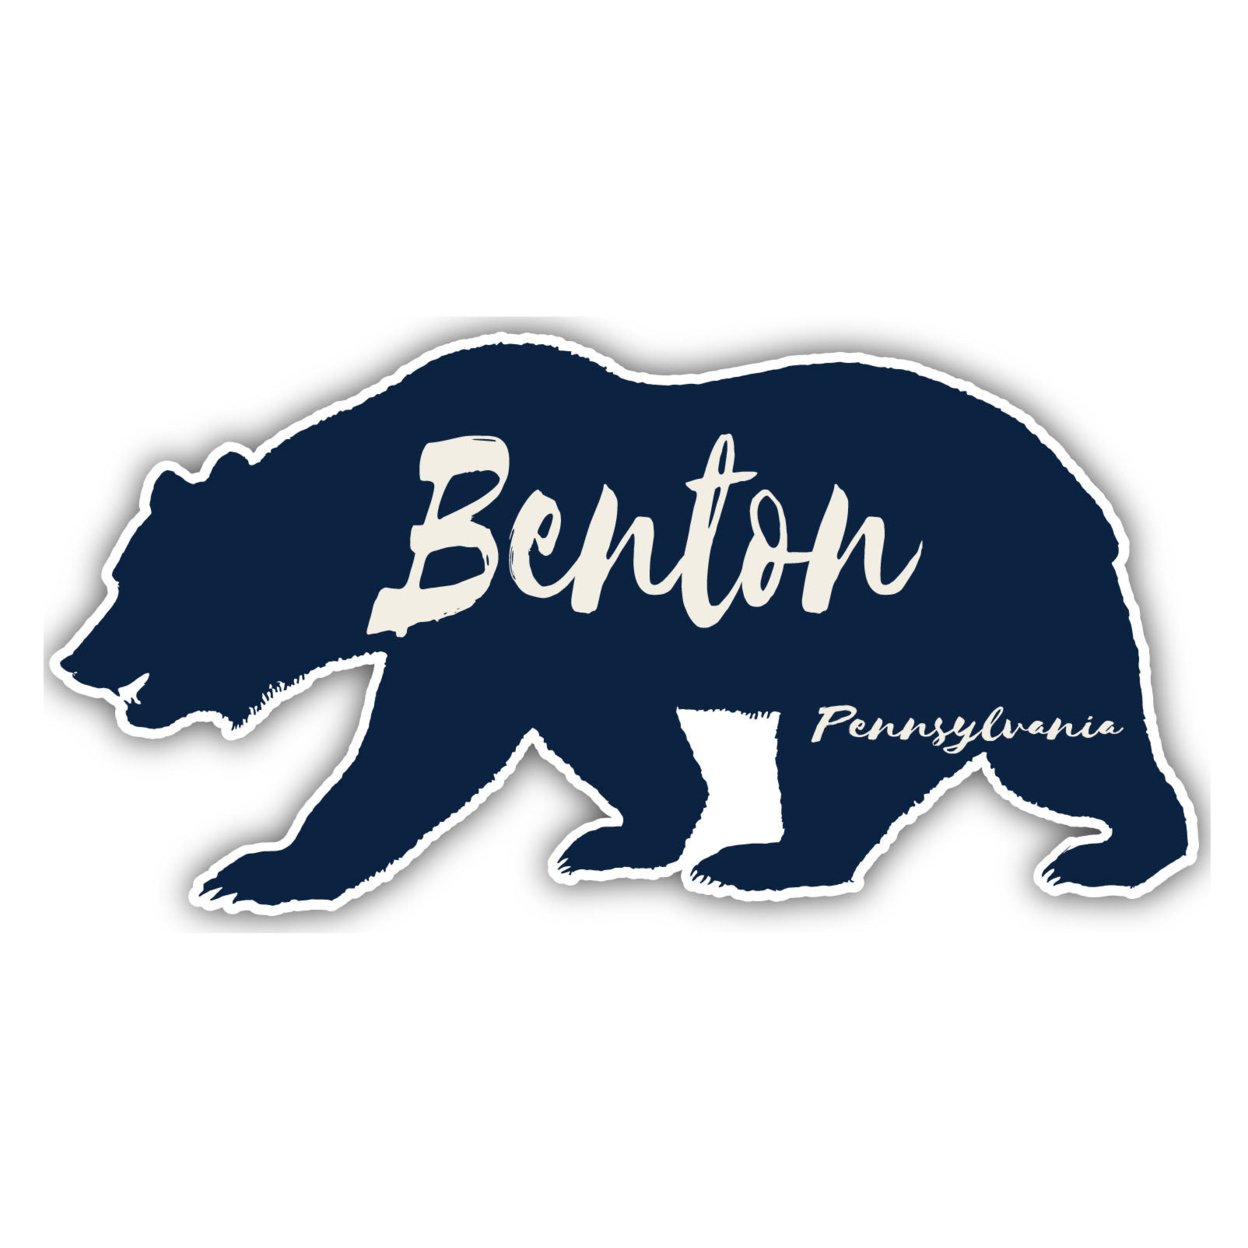 Benton Pennsylvania Souvenir Decorative Stickers (Choose Theme And Size) - Single Unit, 4-Inch, Bear